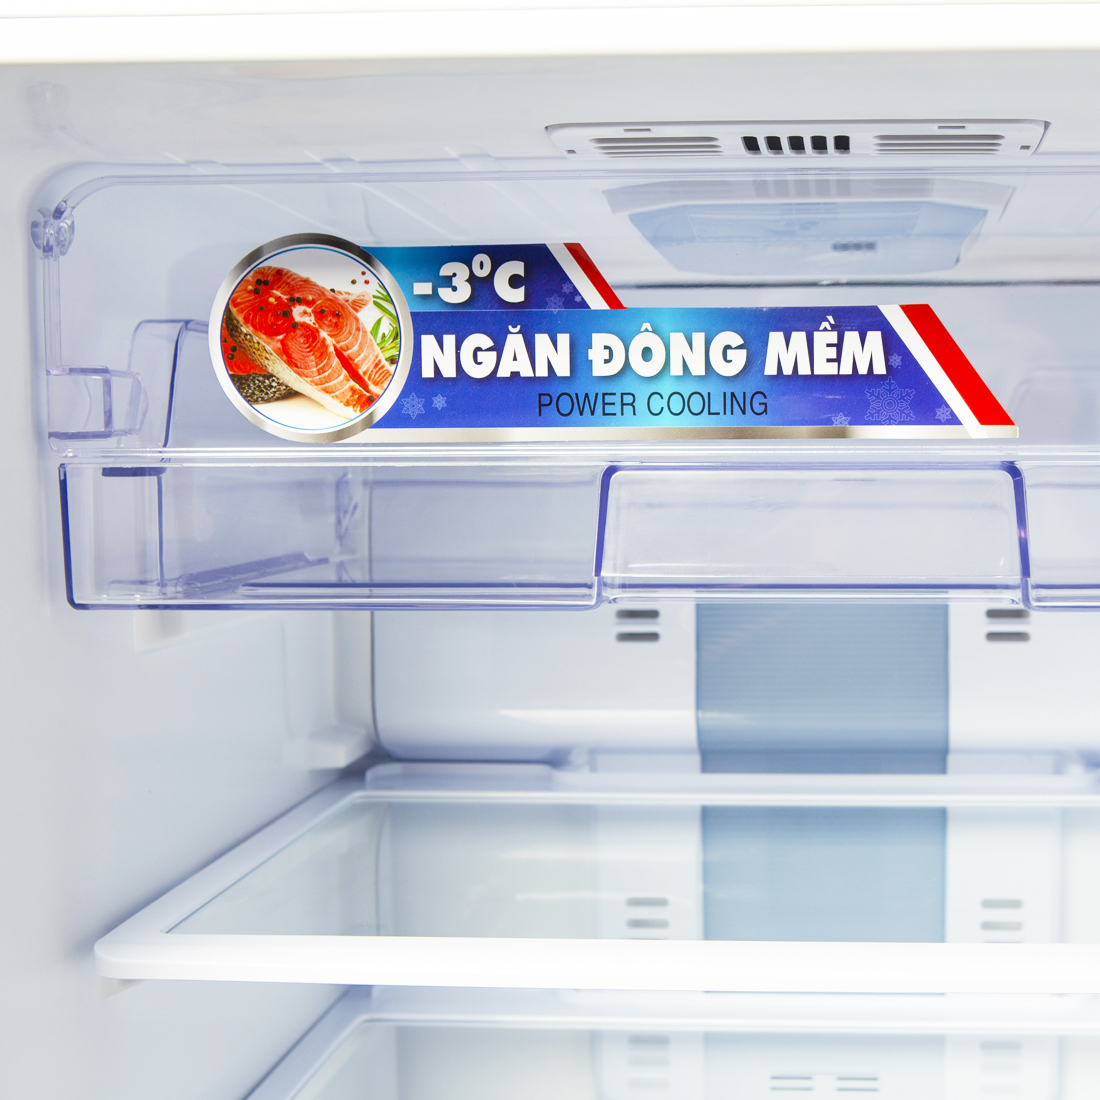 Tủ Lạnh Sanaky VH-149HPN